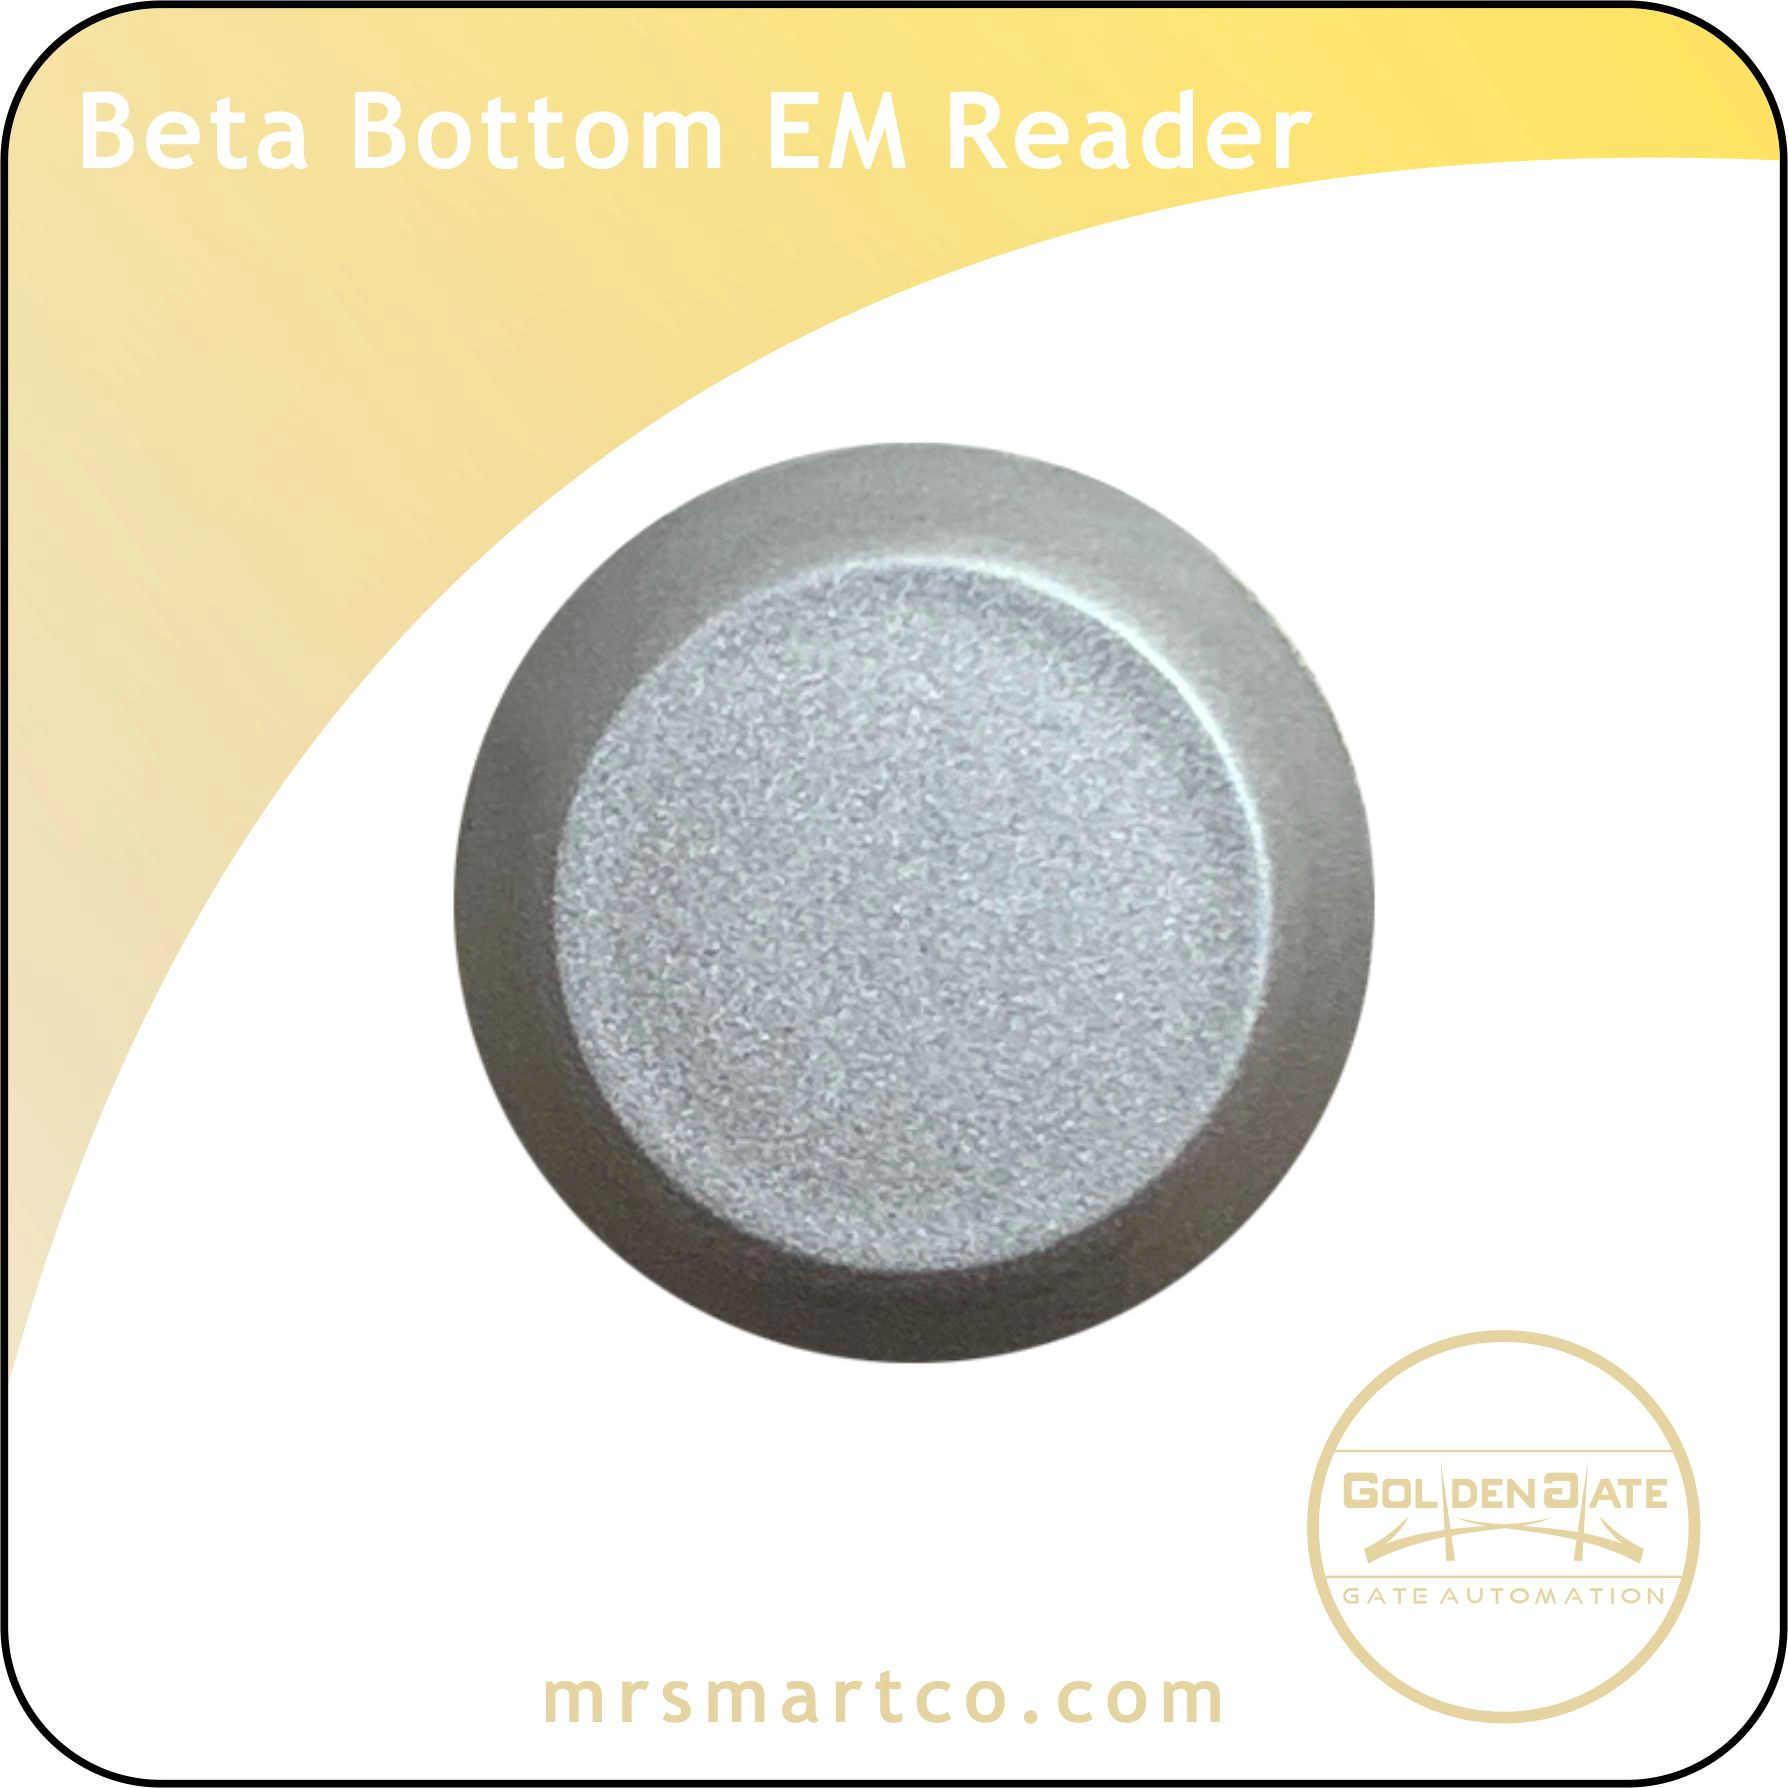 Beta Button EM Reader